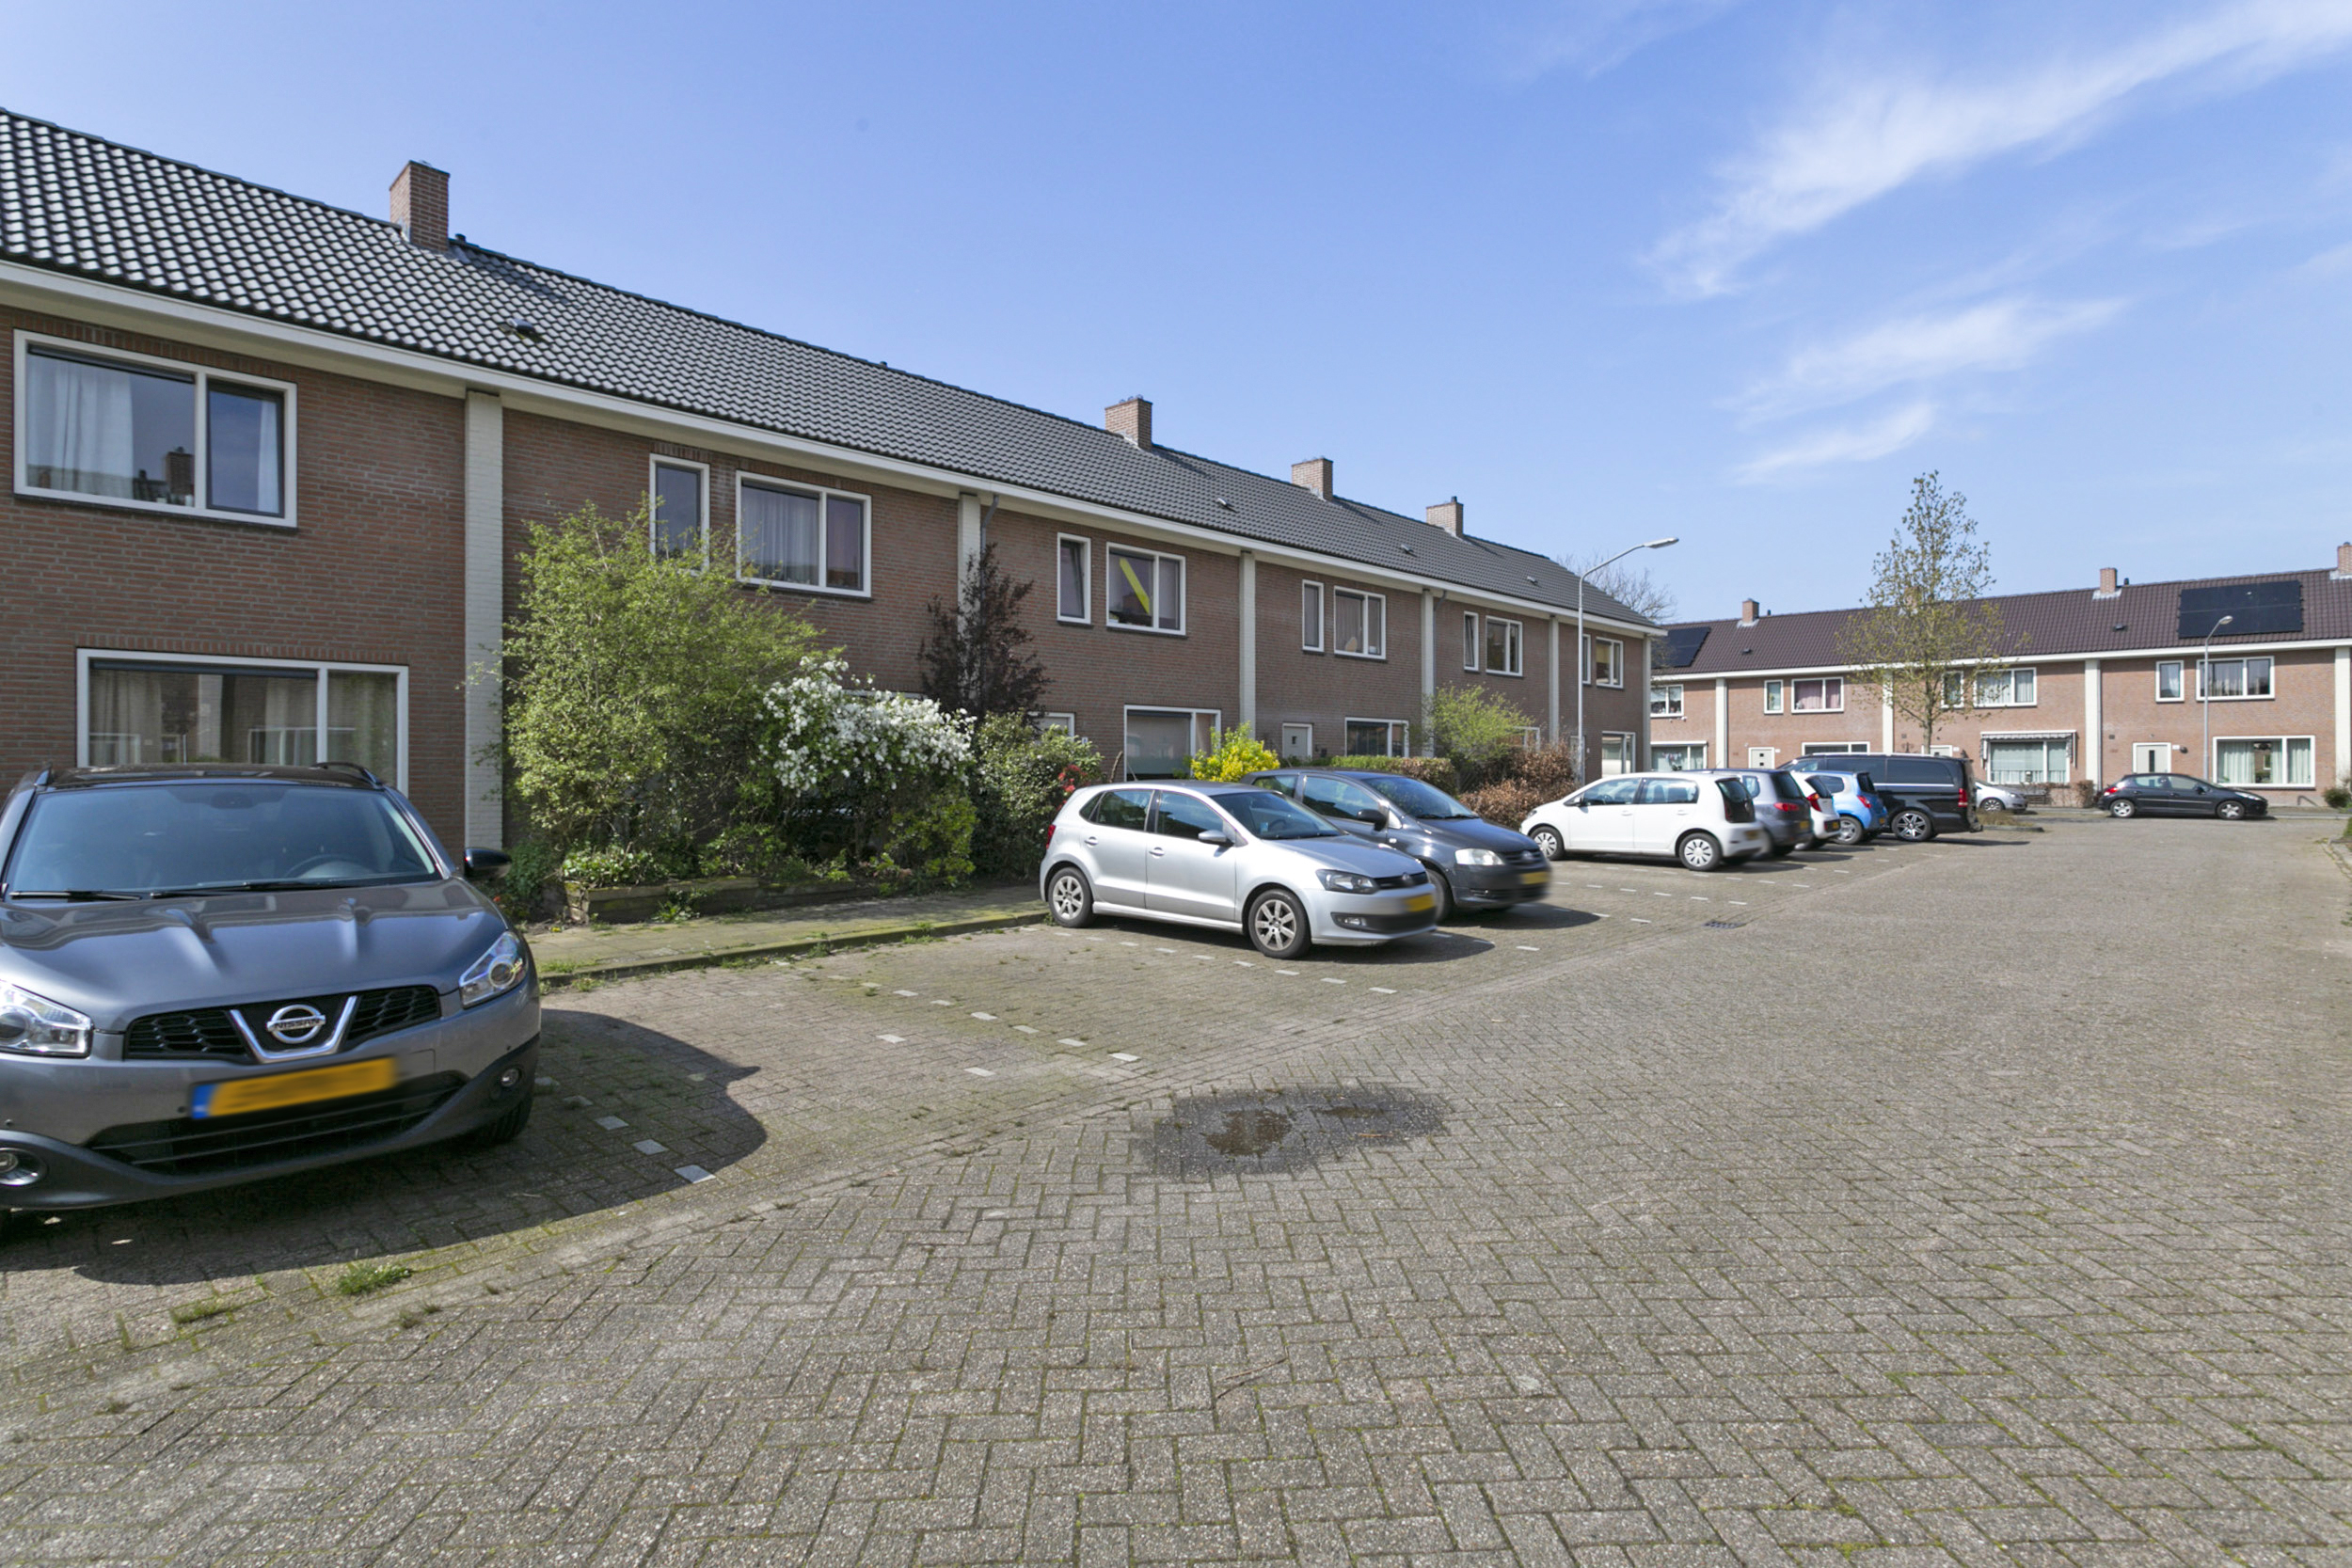 Groen van Prinstererstraat 10, 4926 BN Lage Zwaluwe, Nederland